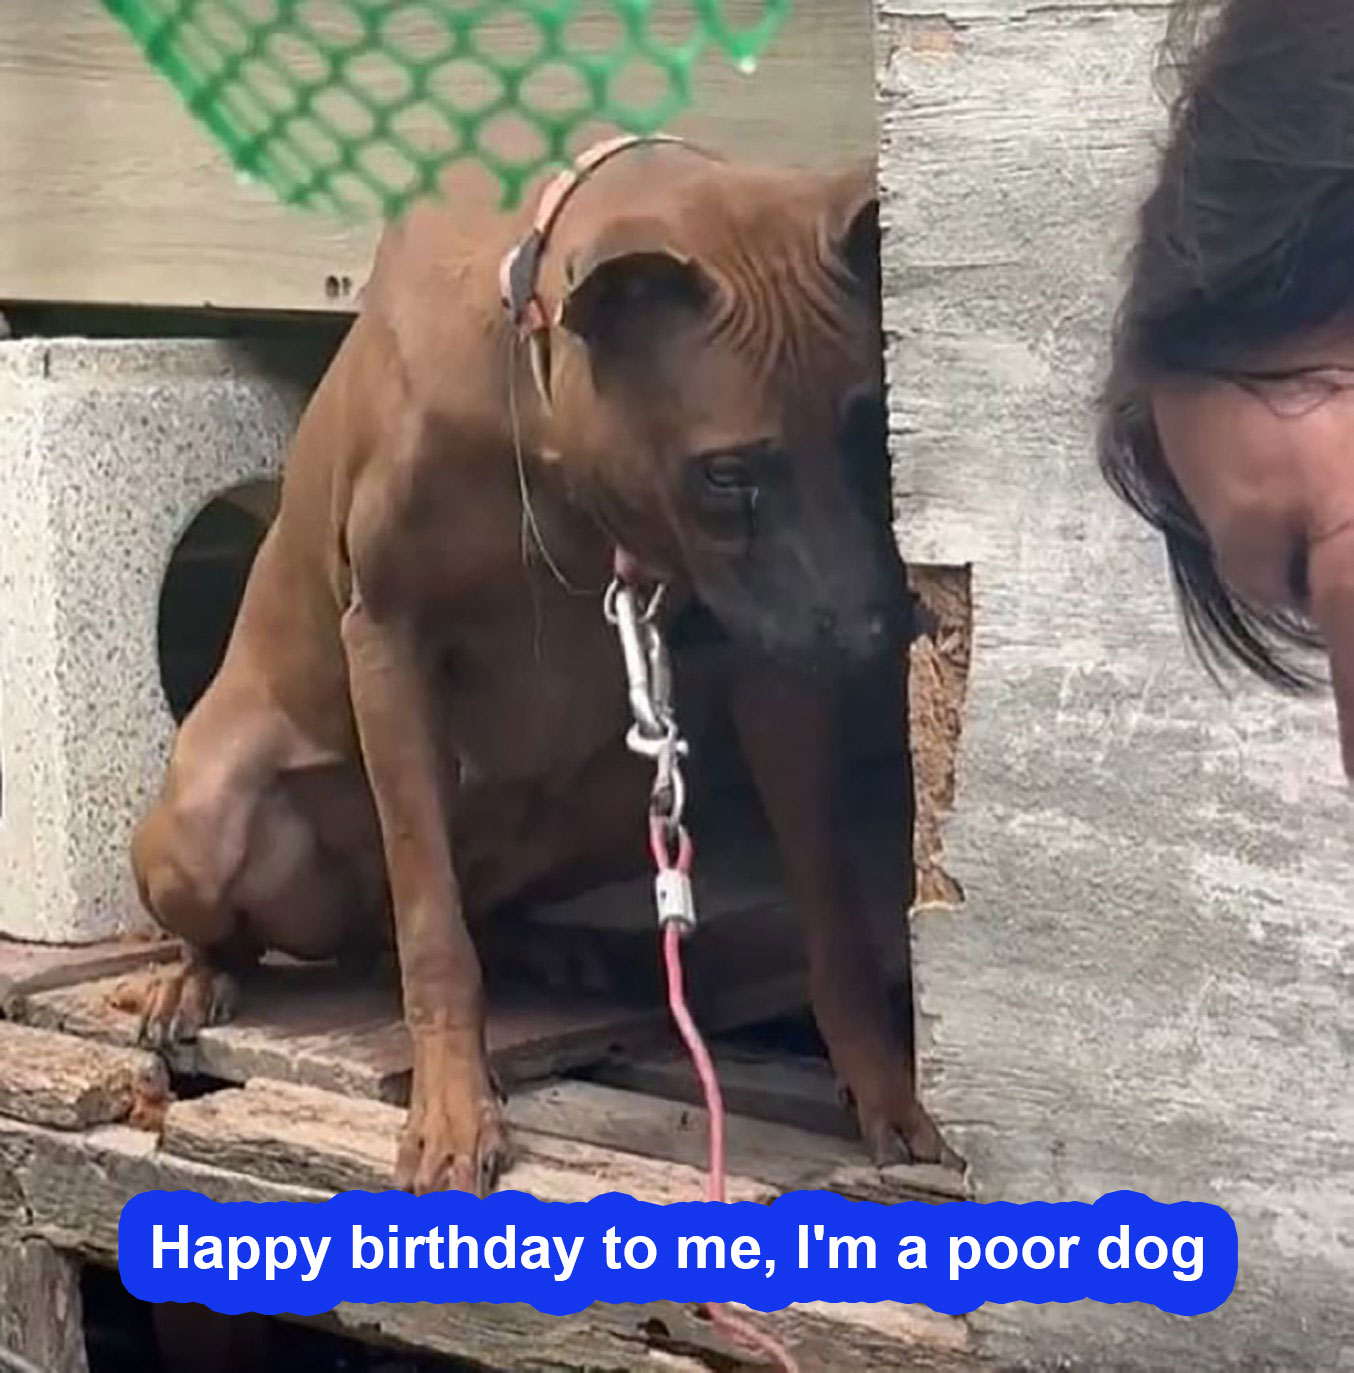 Happy birthday to me, I’m a poor dog